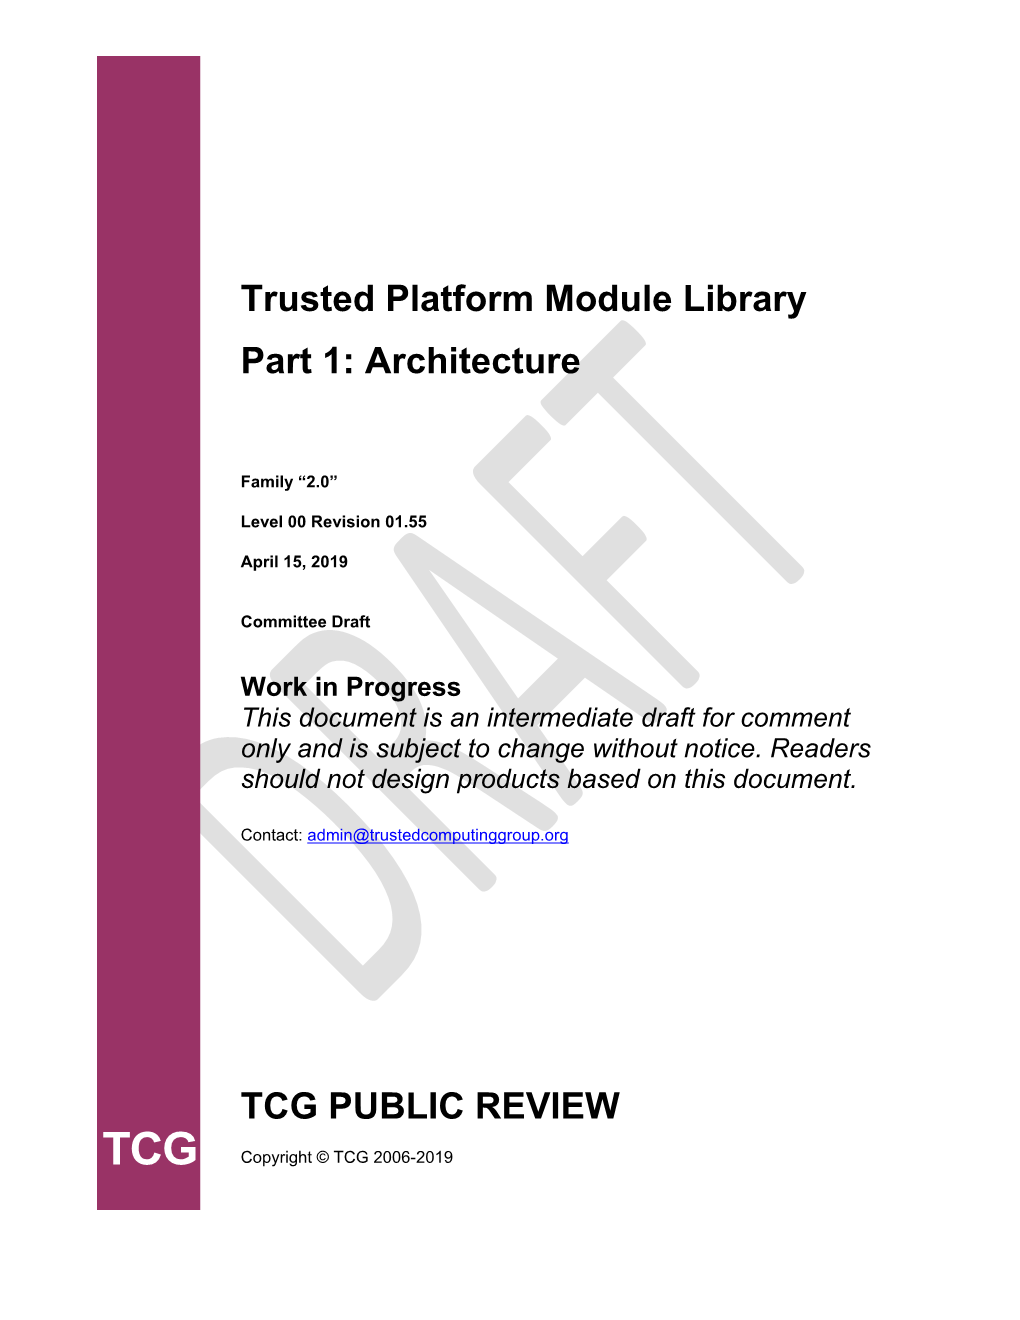 Trusted Platform Module Library Part 1: Architecture TCG PUBLIC REVIEW